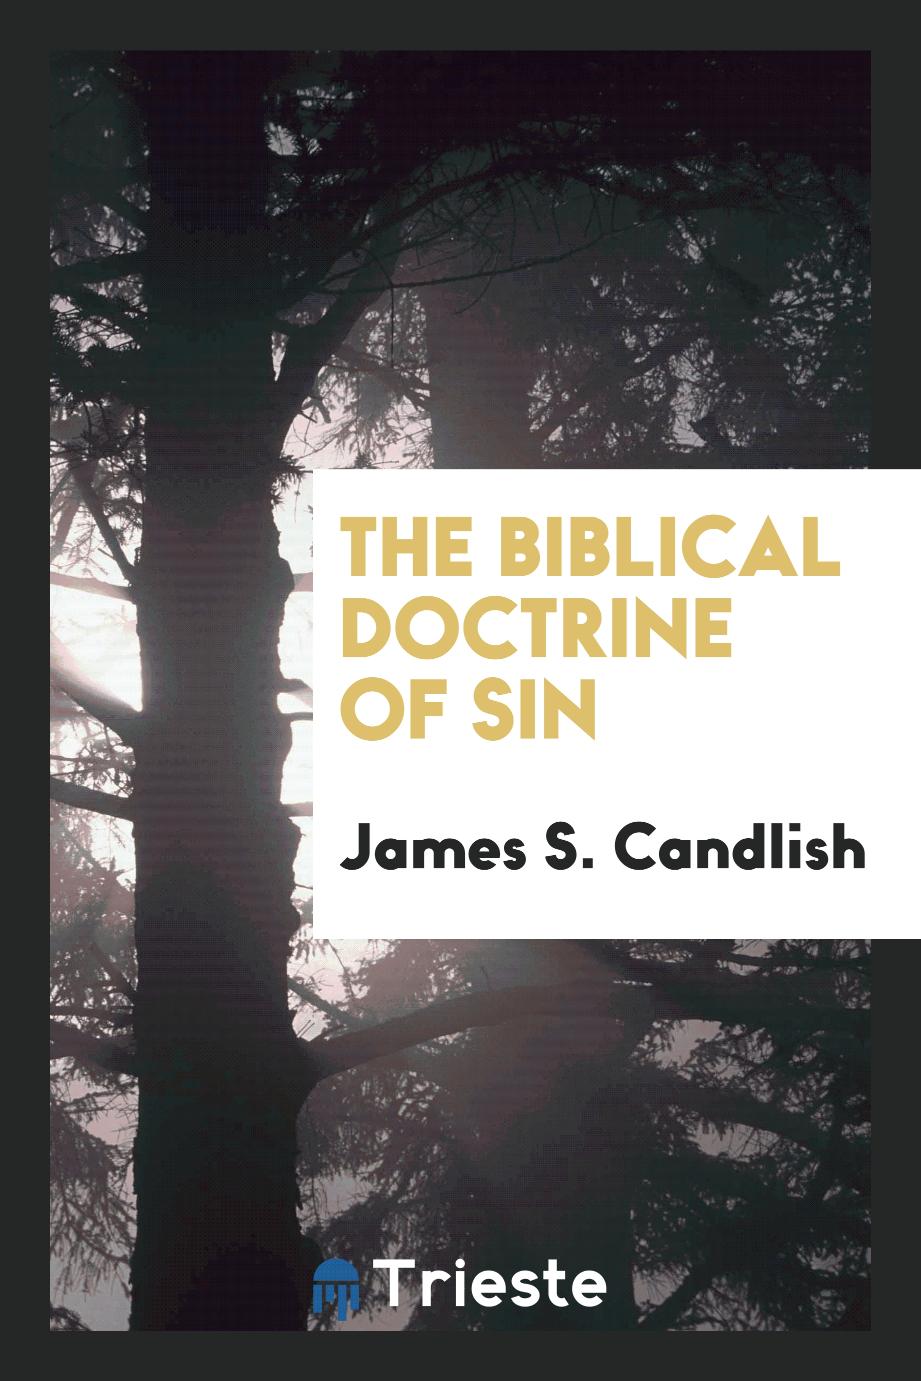 The Biblical doctrine of sin